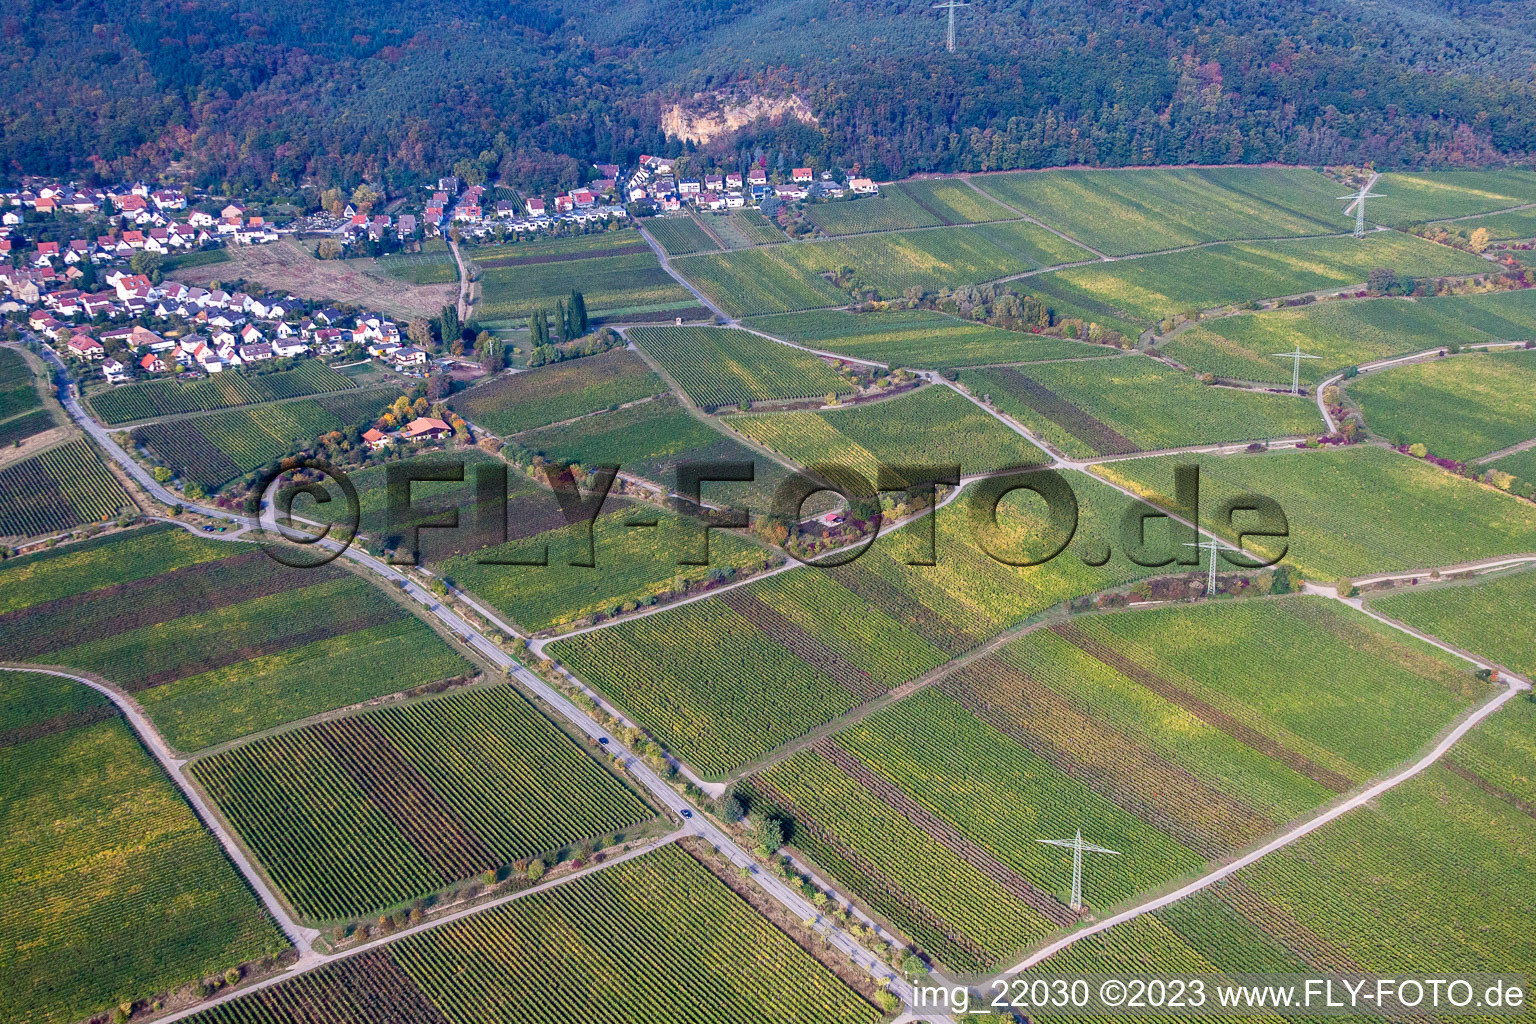 Drone image of District Königsbach in Neustadt an der Weinstraße in the state Rhineland-Palatinate, Germany